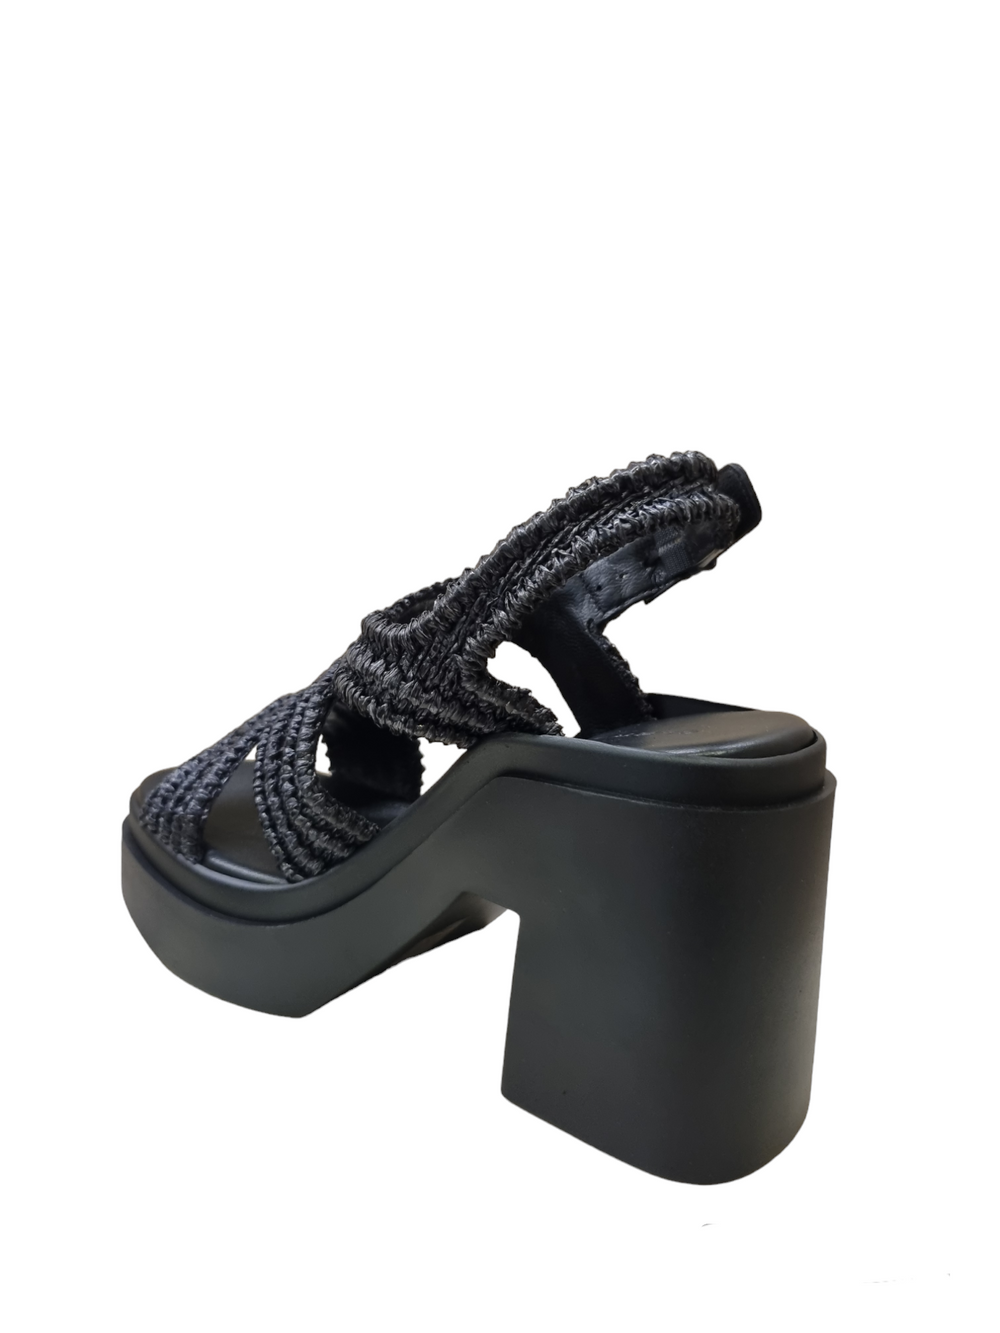 Natsu Black Raffia Platform Sandals - Clergerie - Liberty Shoes Australia